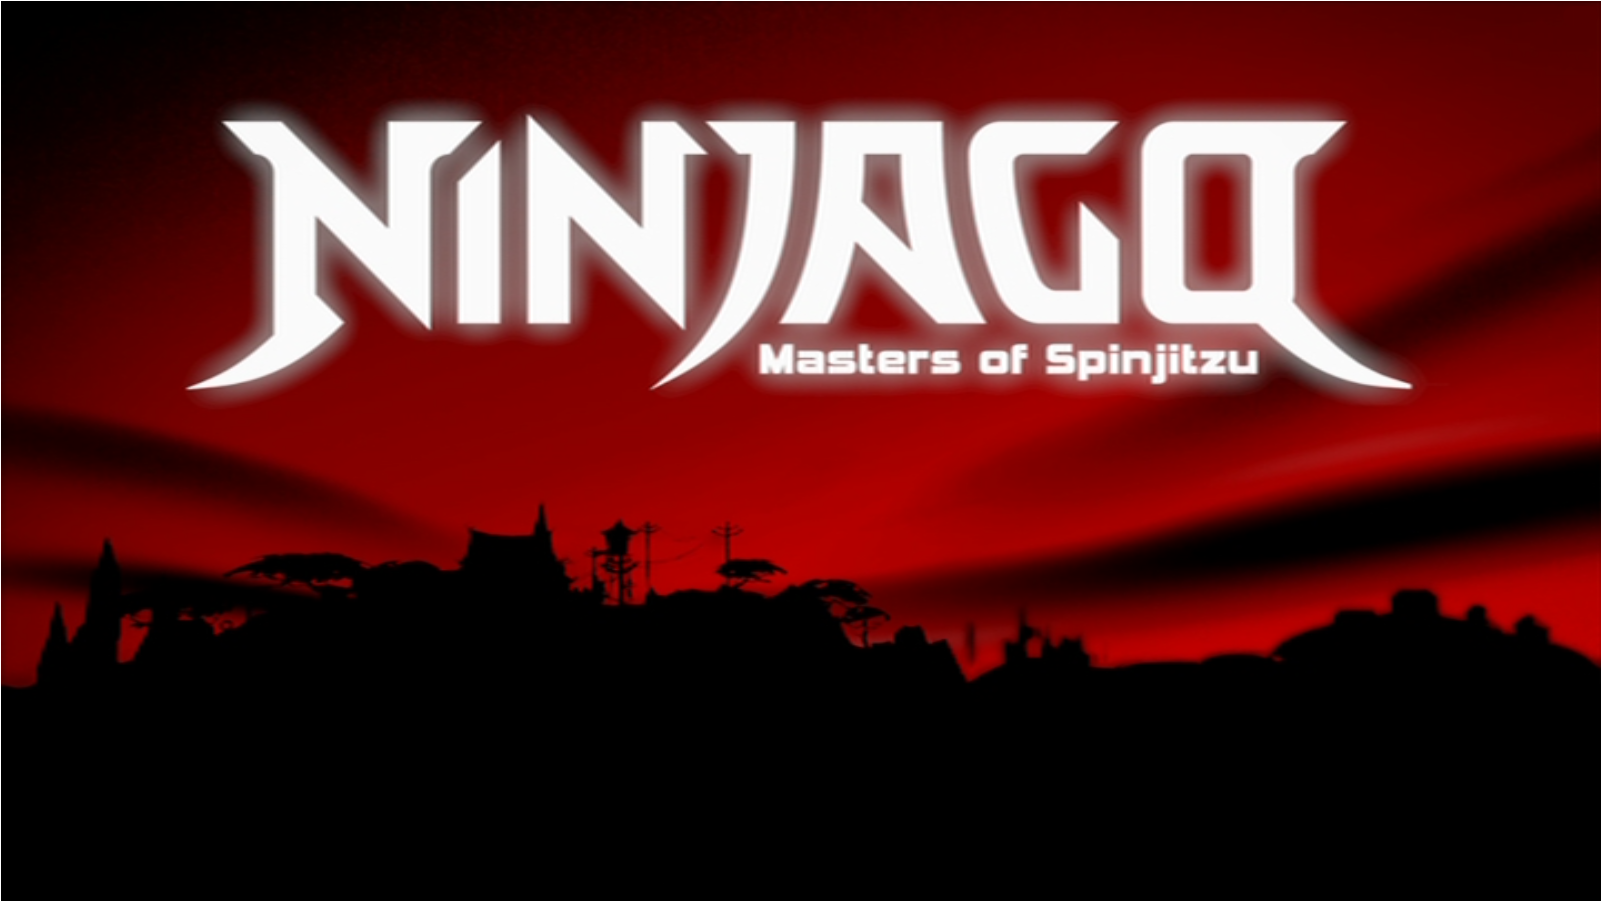 Ninjago Masters Of Spinjitzu Puter Wallpaper Desktop Background